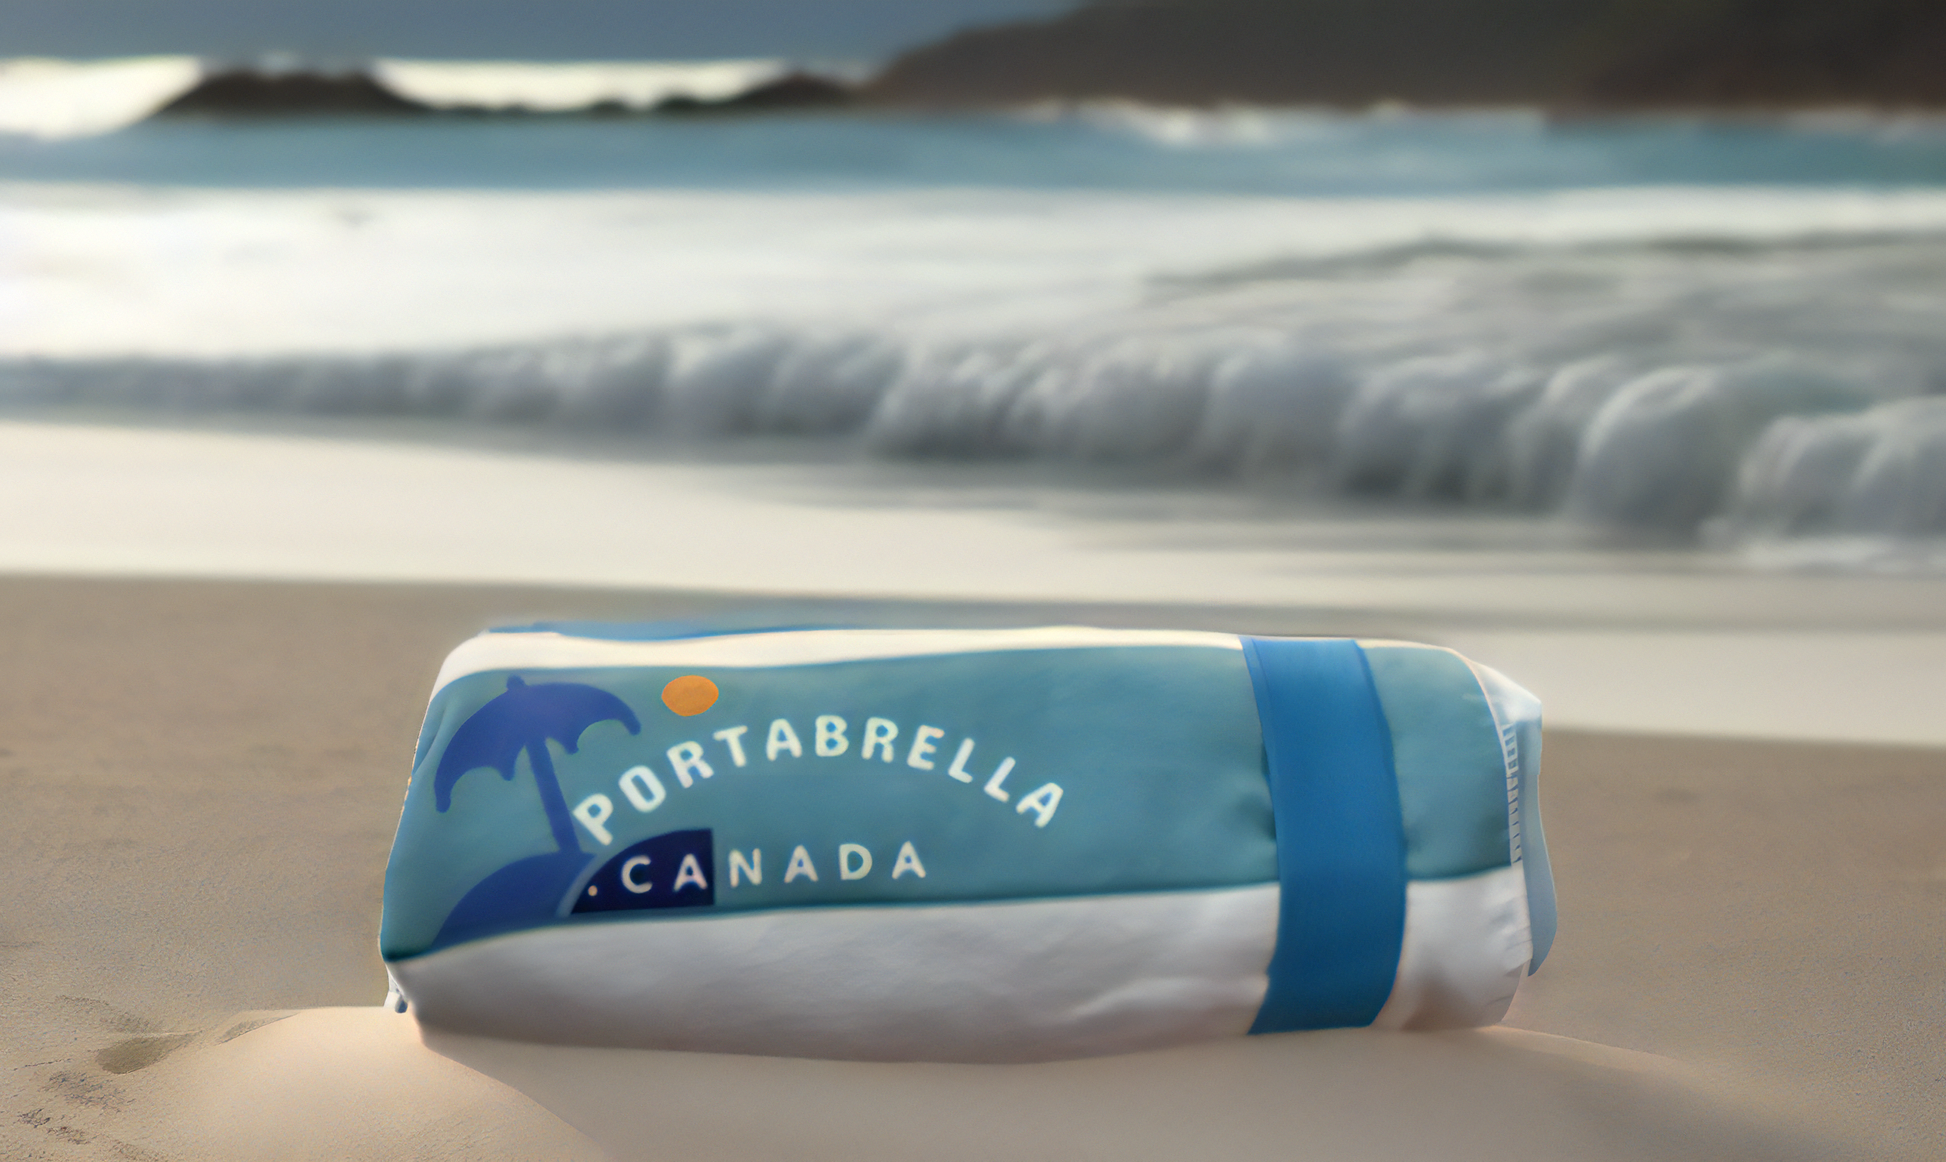 Nanofiber Sand-Free Beach Towels - Portabrella Canada